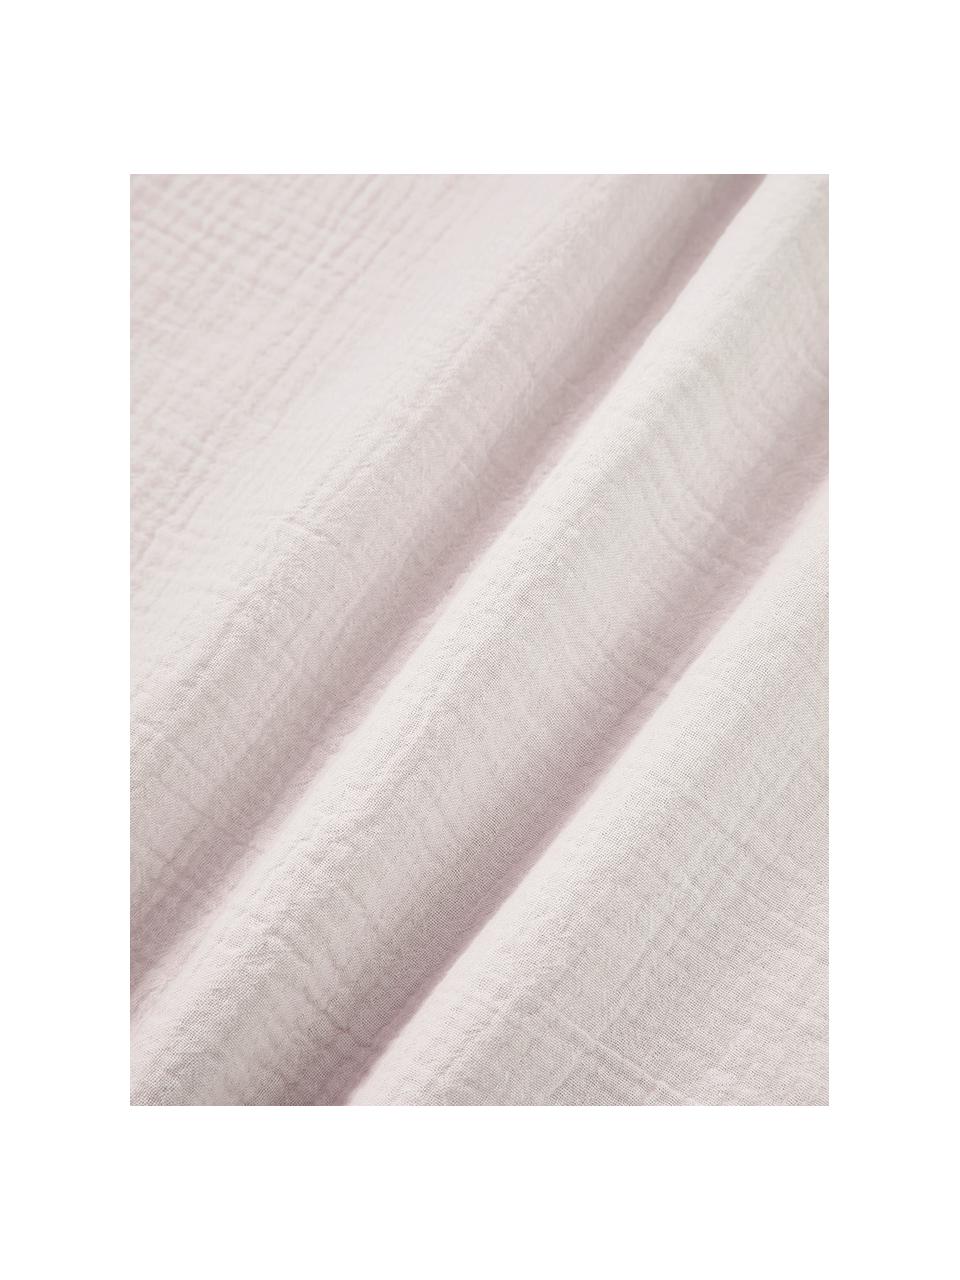 Funda de almohada de muselina Odile, Rosa claro, An 45 x L 110 cm